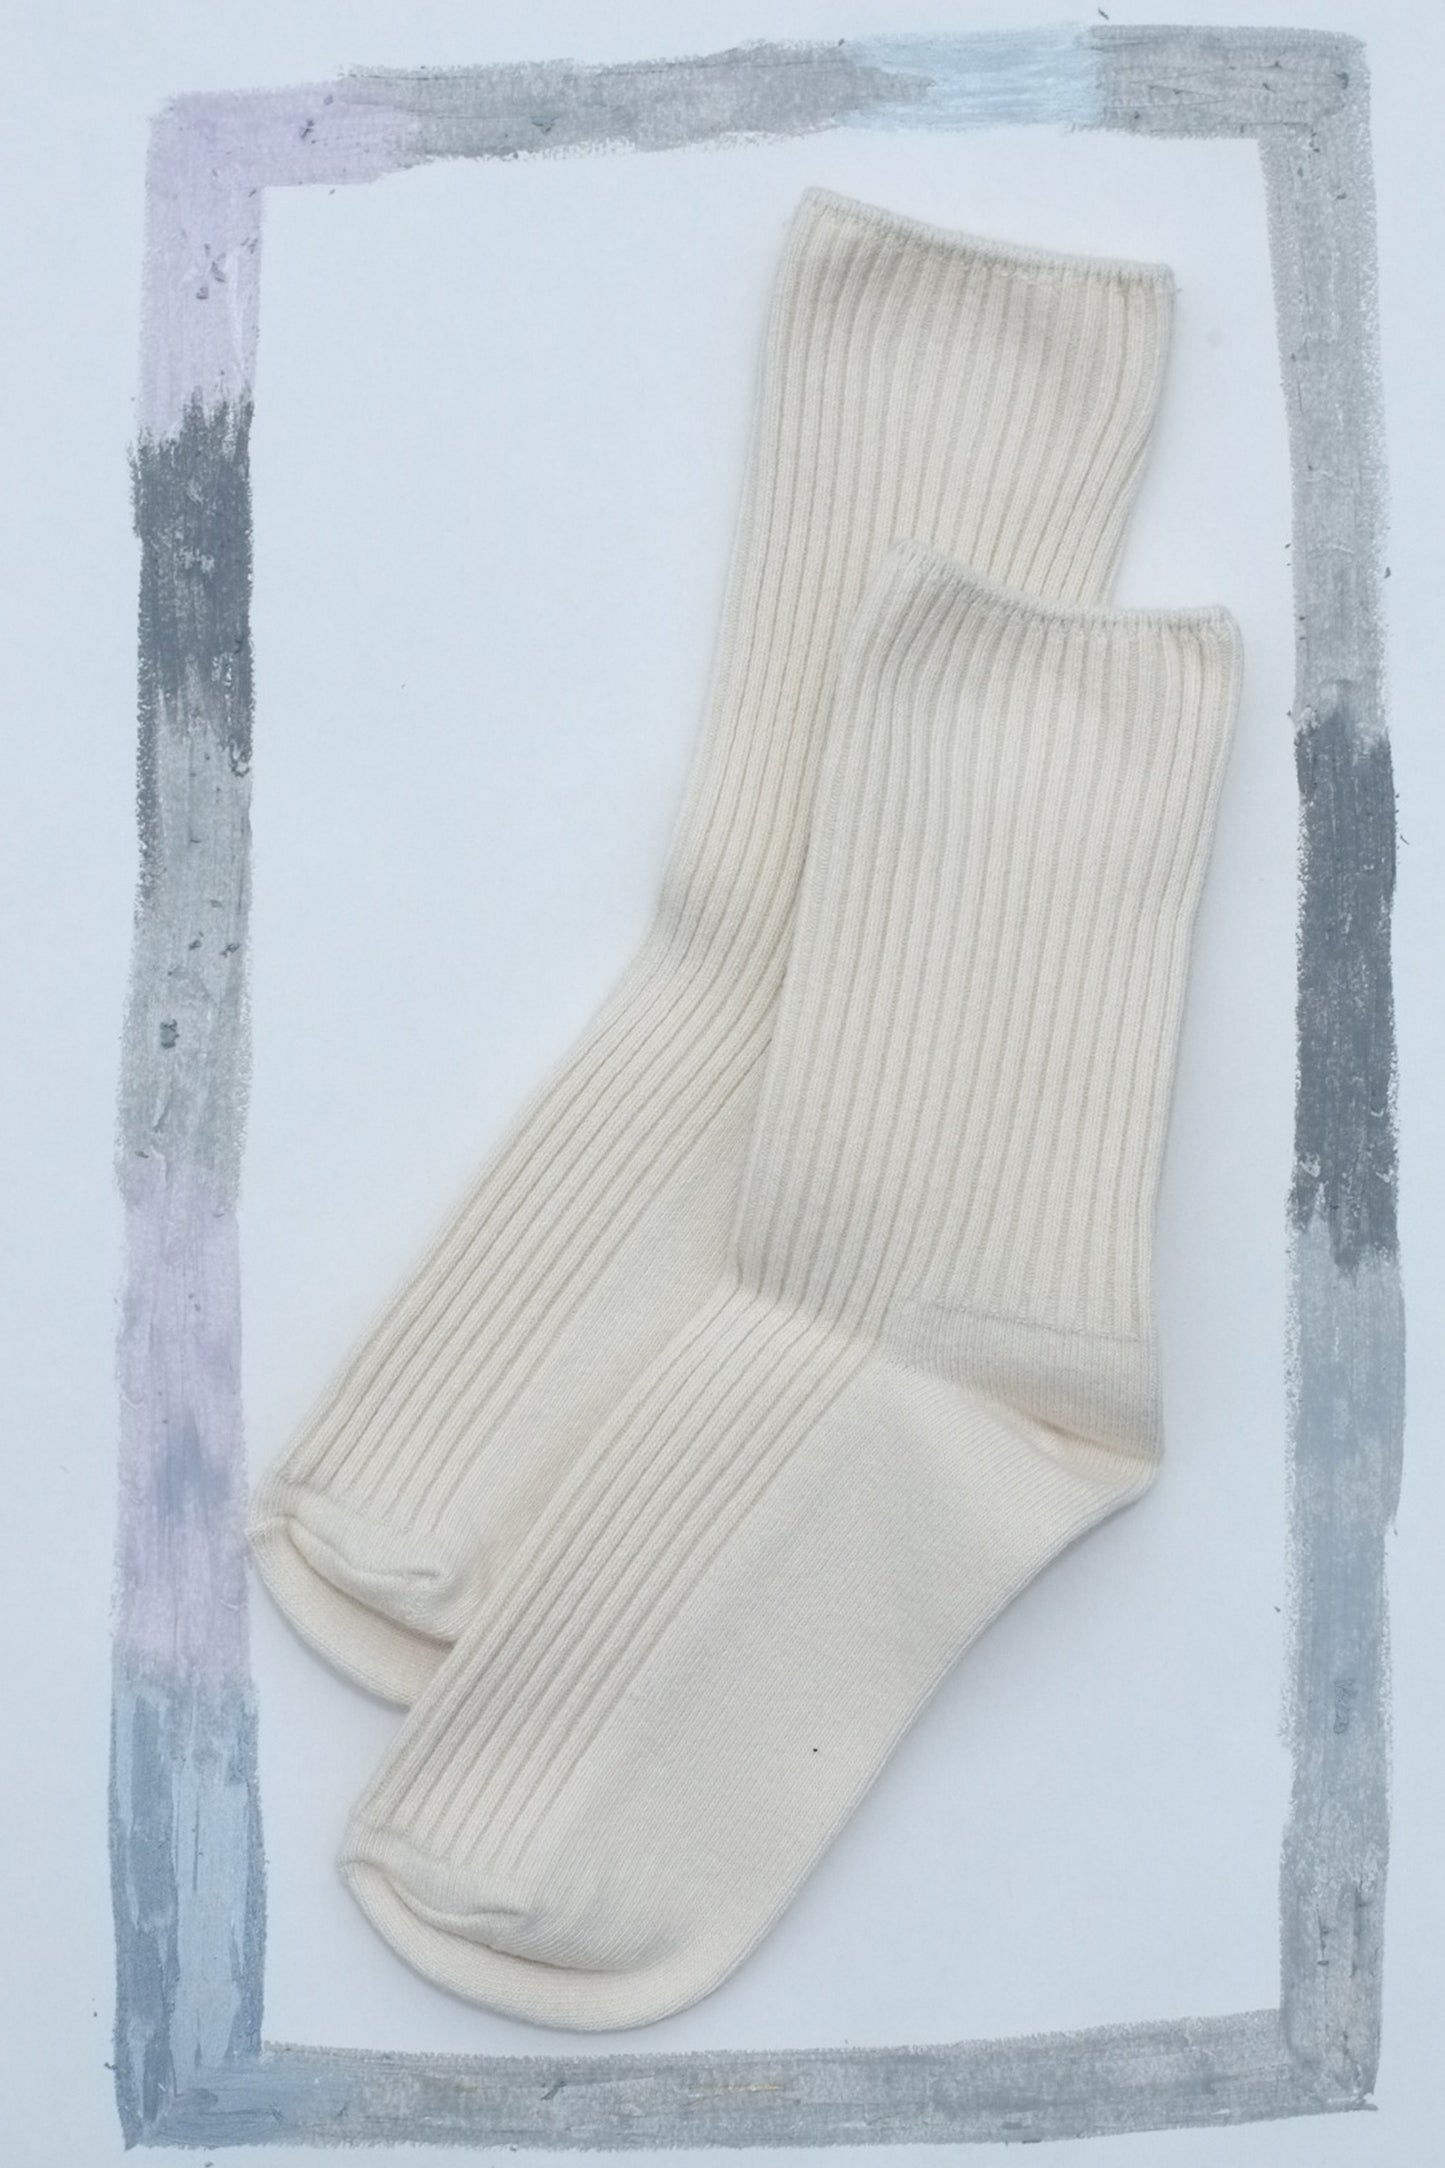 Cotton 2x2 Ribbed Socks